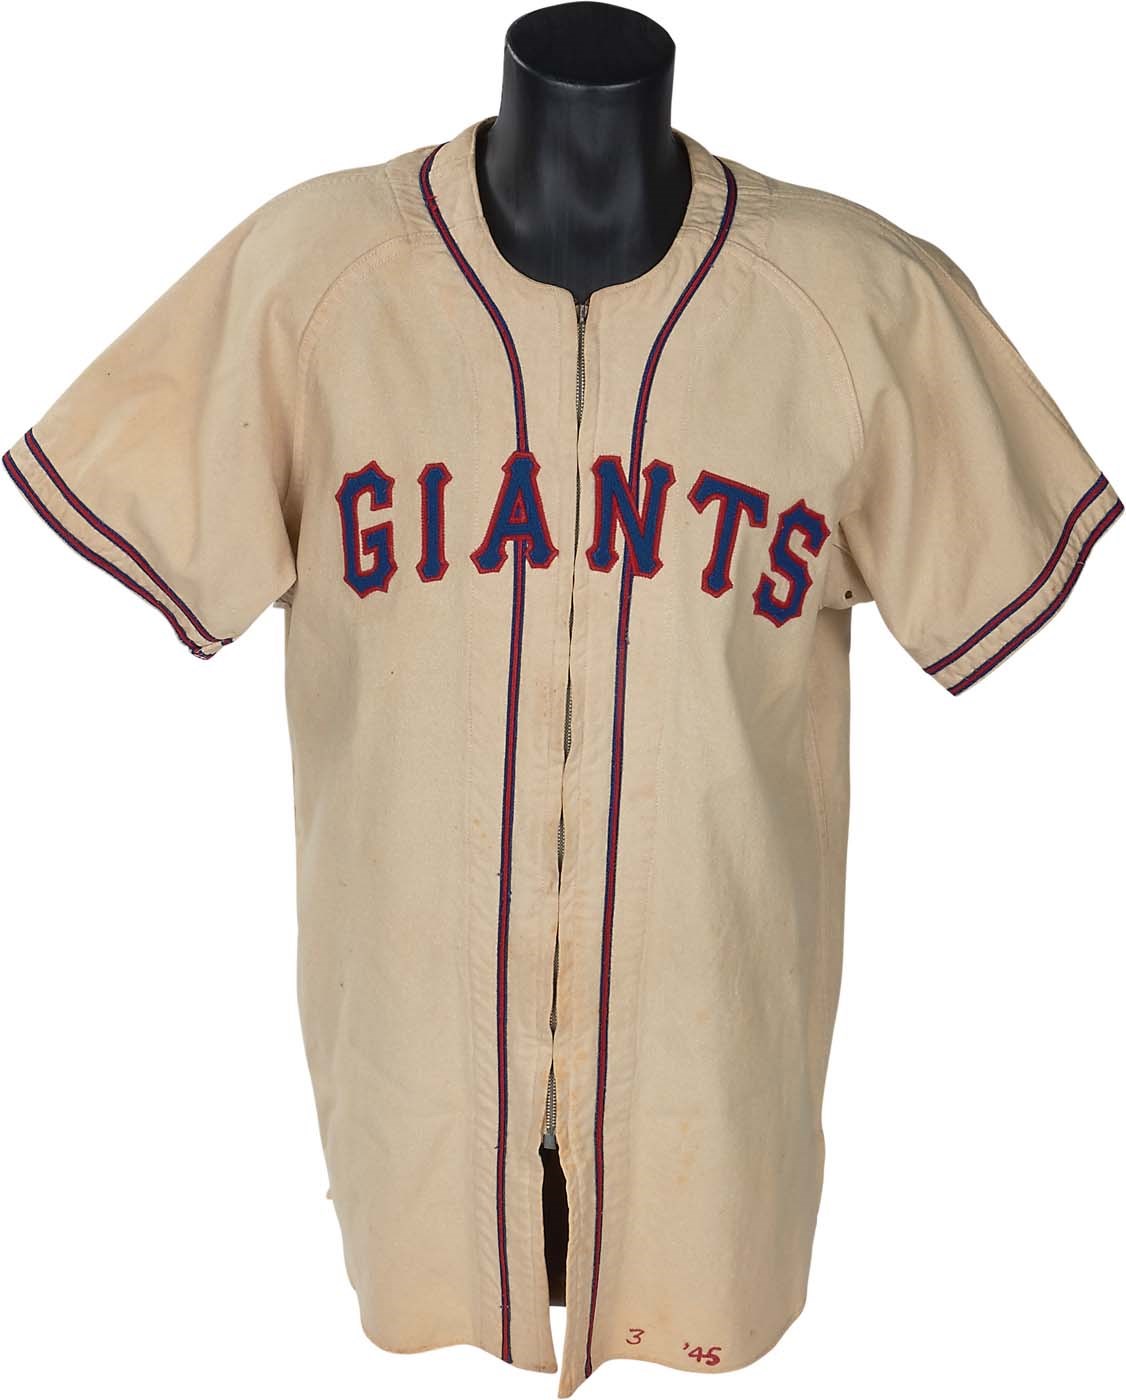 Baseball Equipment - 1945 Mel Ott New York Giants Game Worn Jersey (MEARS 8.5) - 50/50 Chance It Is His 500 Home Run Jersey